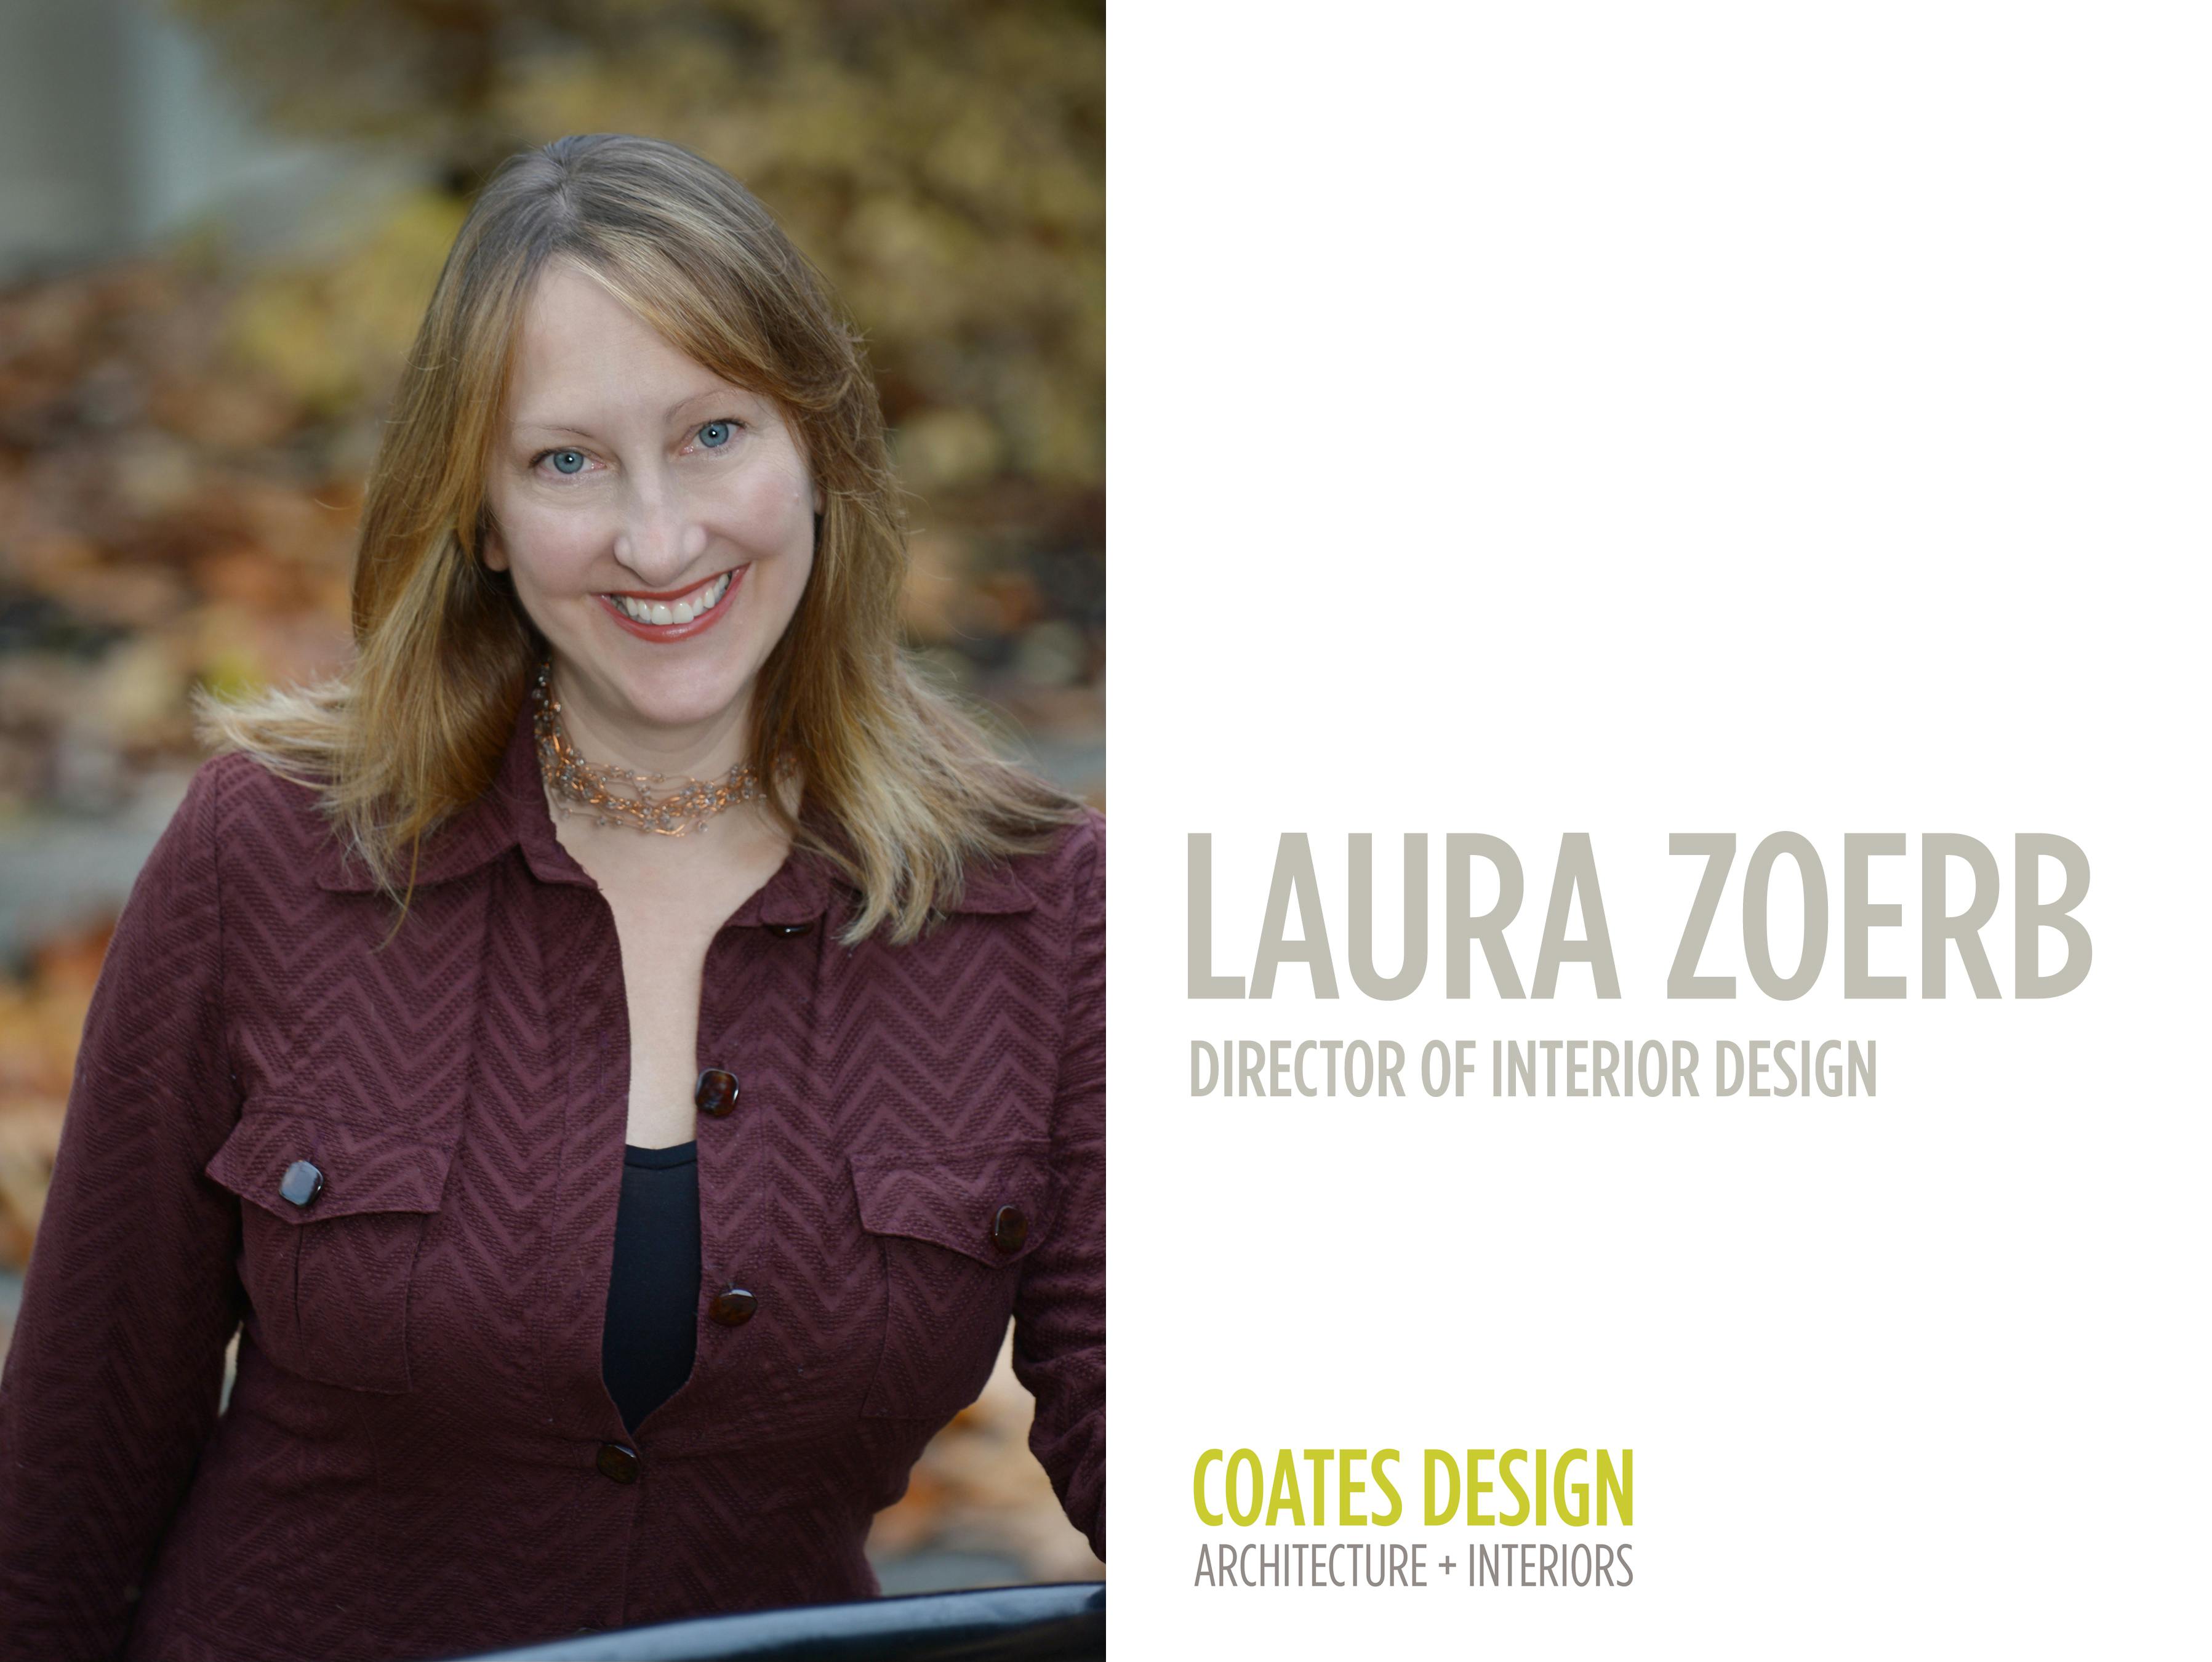 Laura Zoerb Joins Coates Design To Lead Interior Design